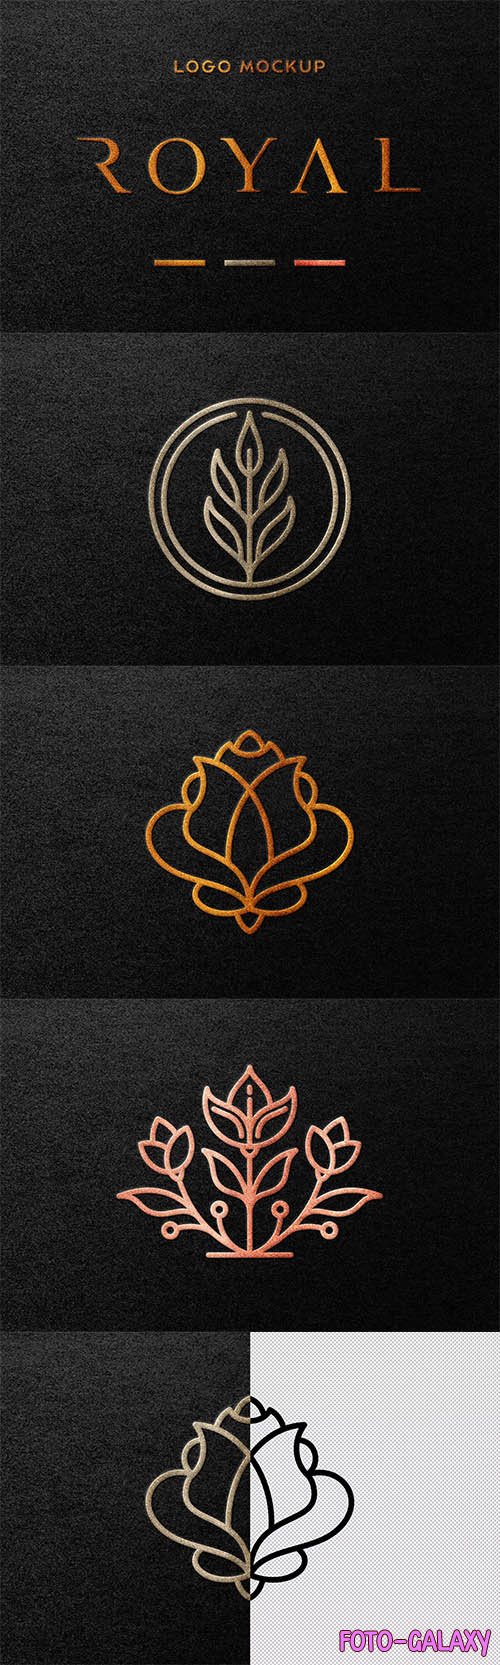 Royal Foil Stamping Logo Mockup PSD